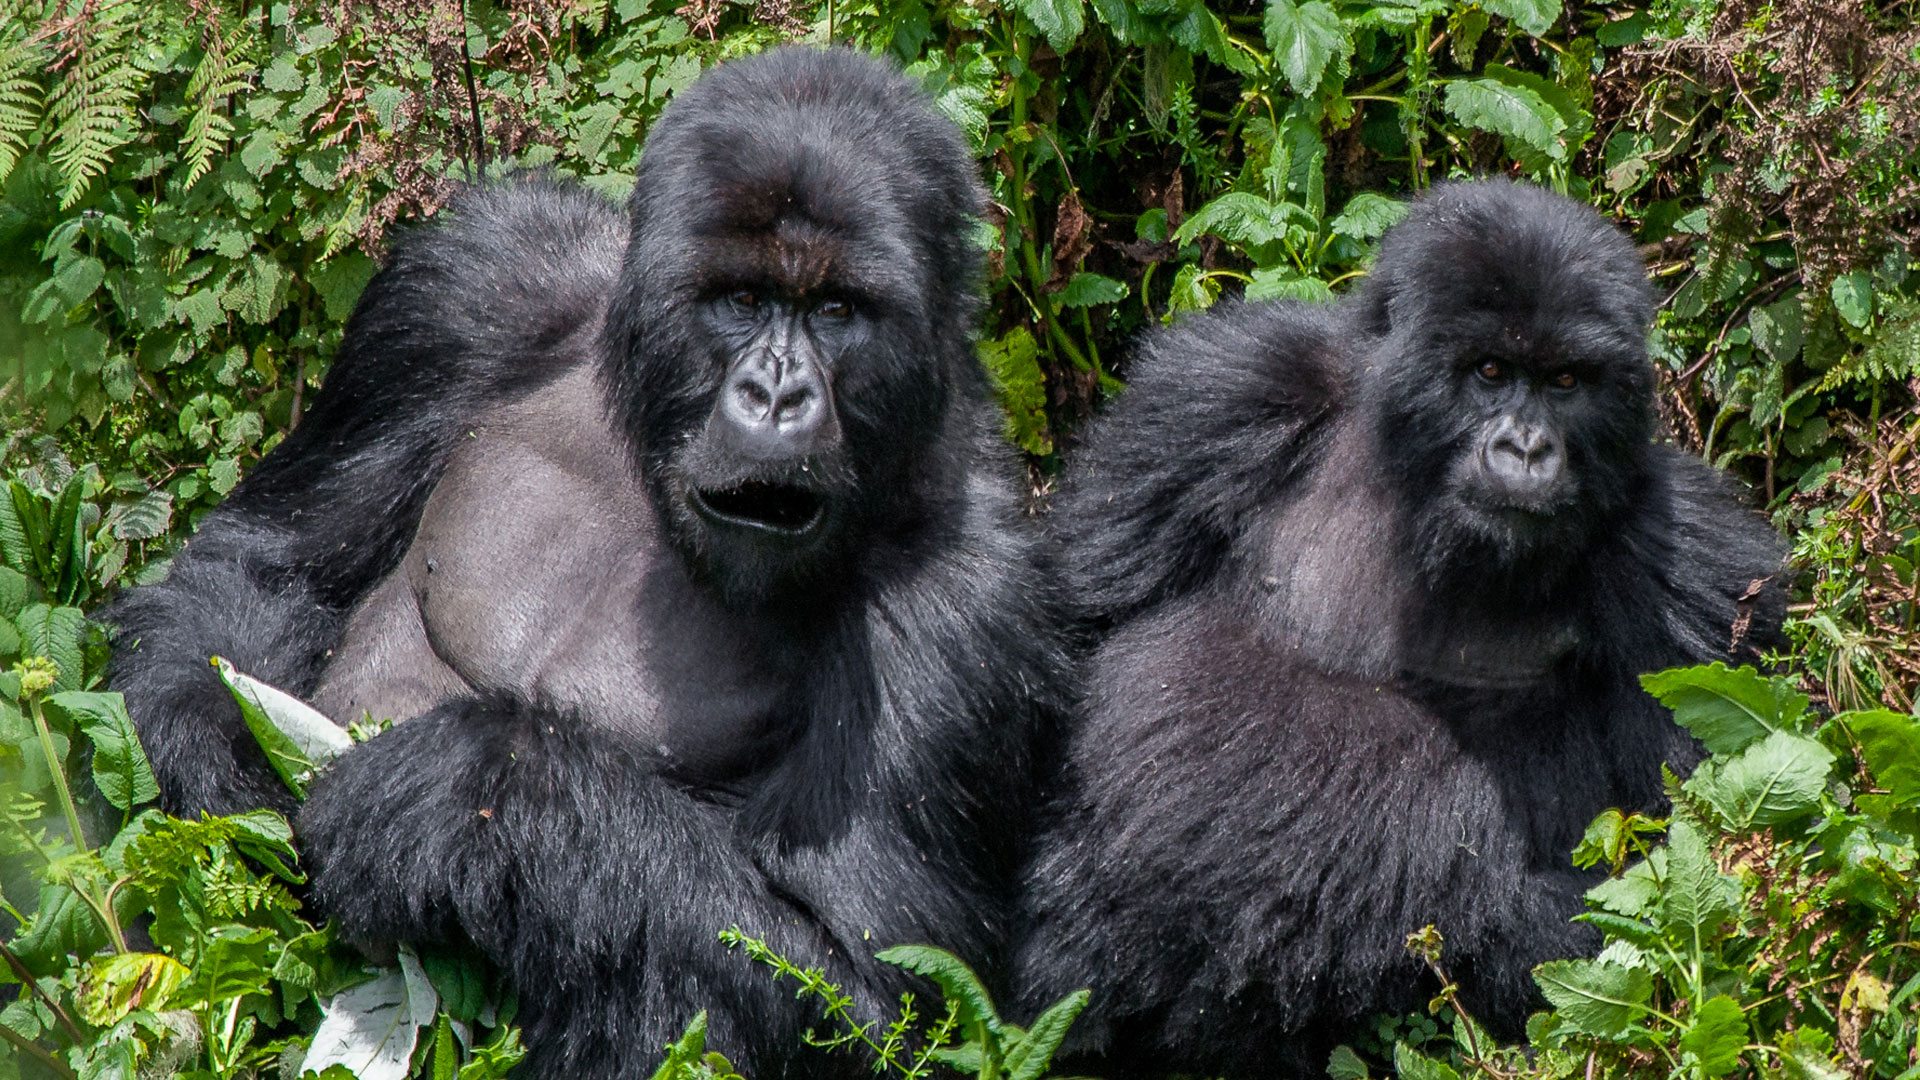 Tracking Gorillas In Uganda On A Budget